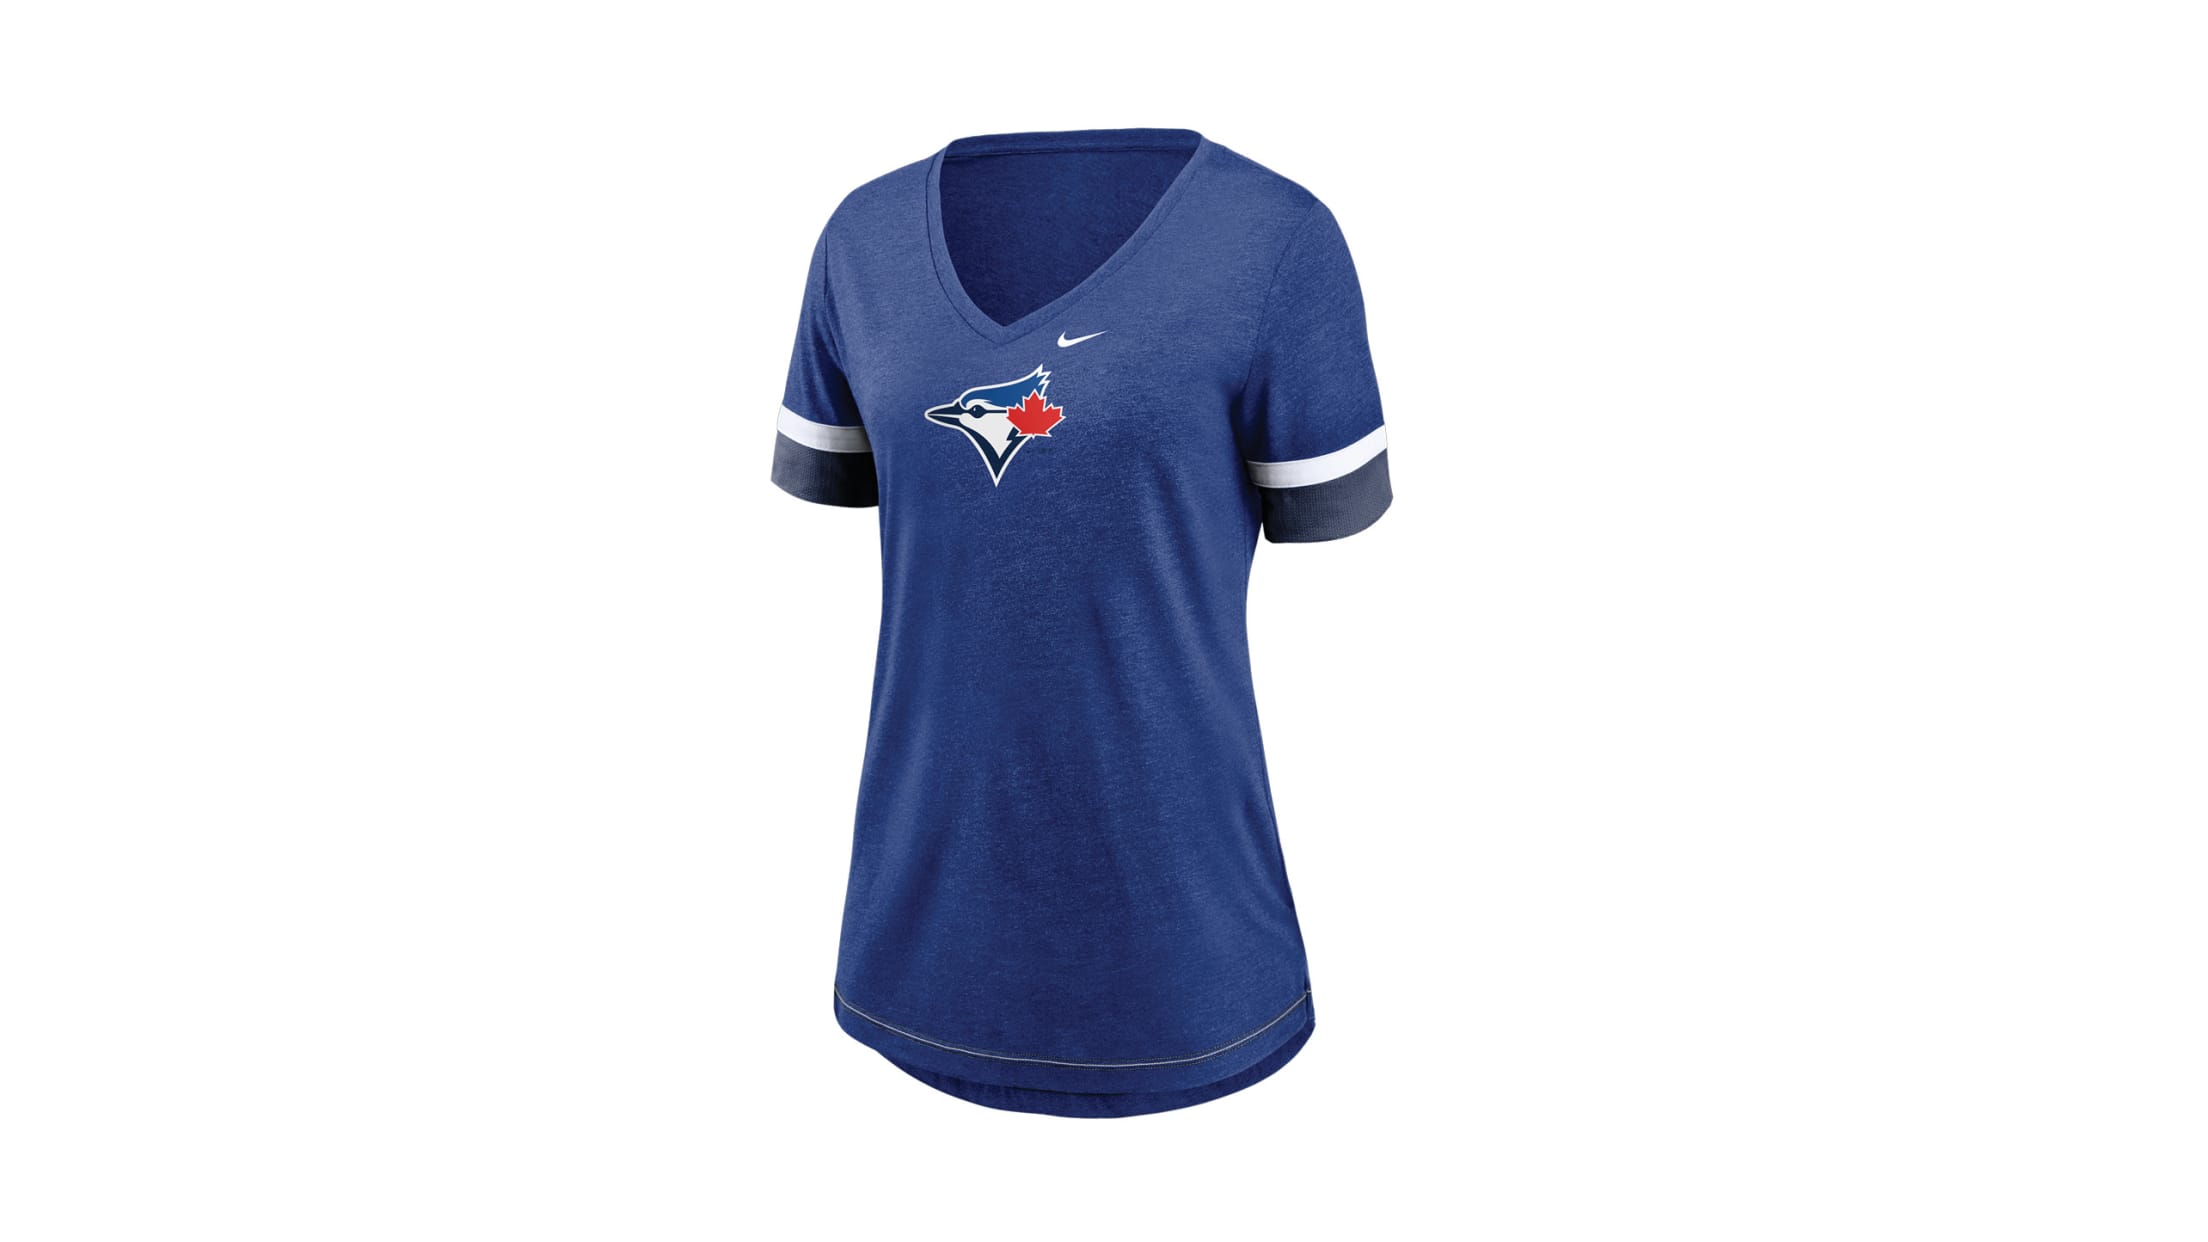 MLB Toronto Blue Jays Women's Play Ball Fashion Jersey - XS